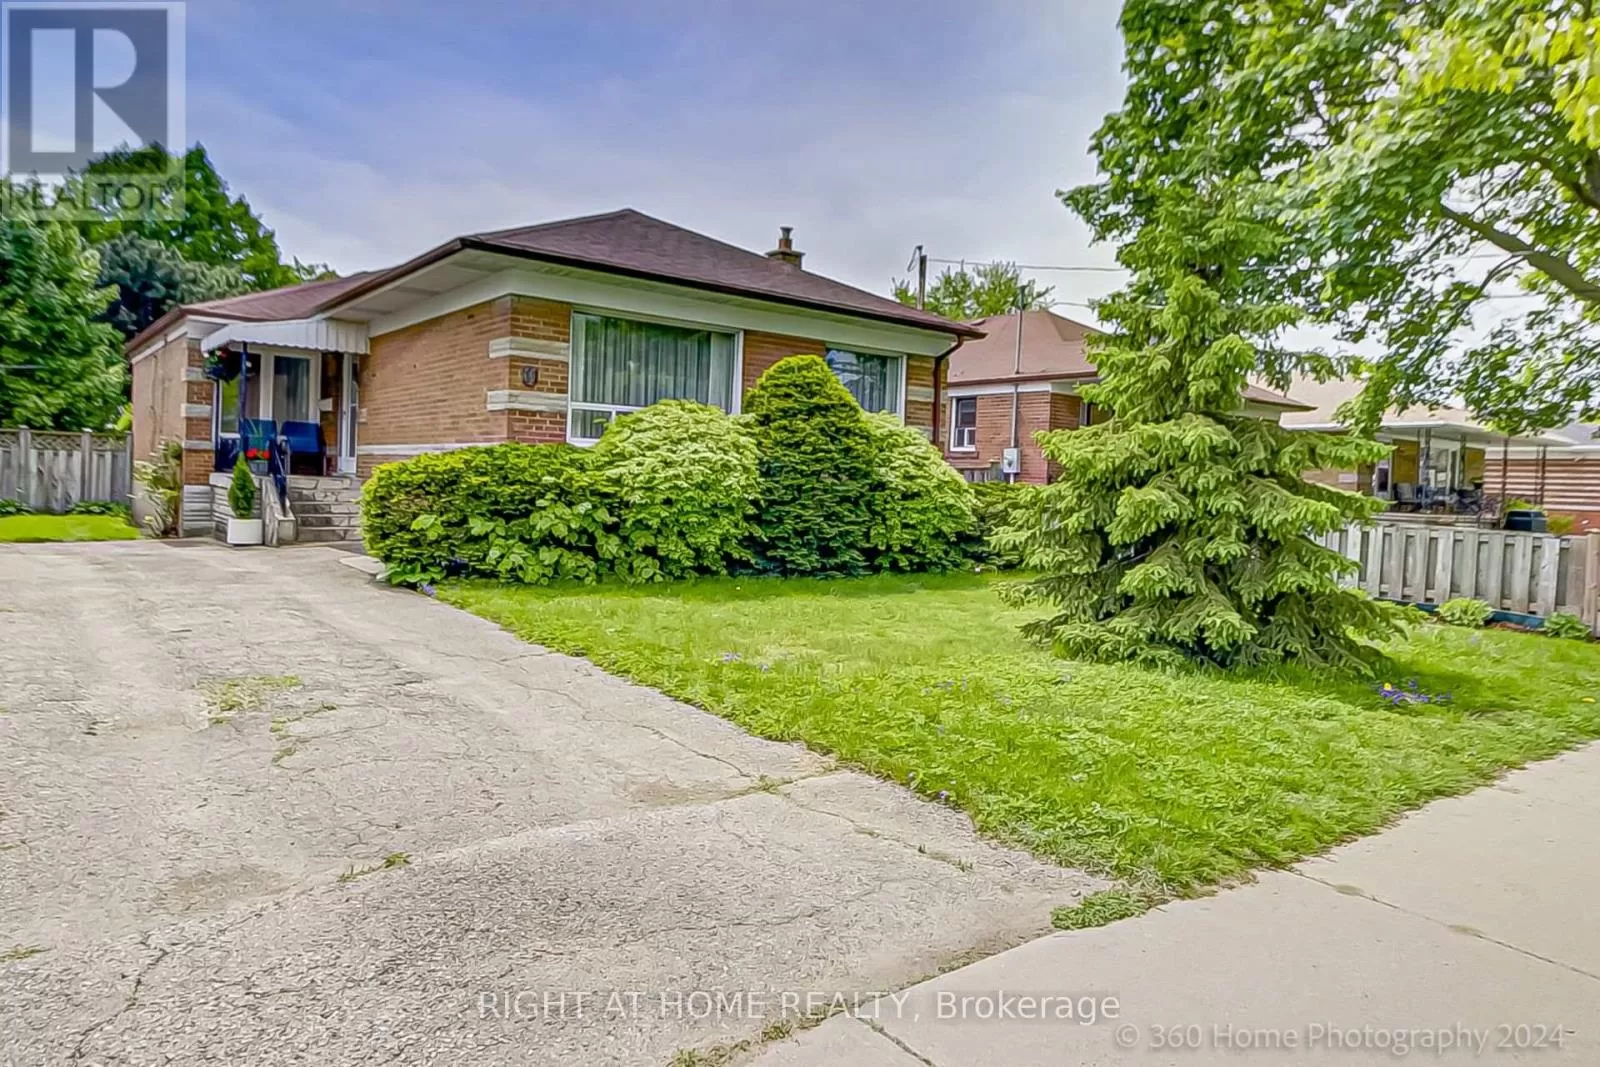 House for rent: 11 Velma Drive, Toronto, Ontario M8Z 2N2